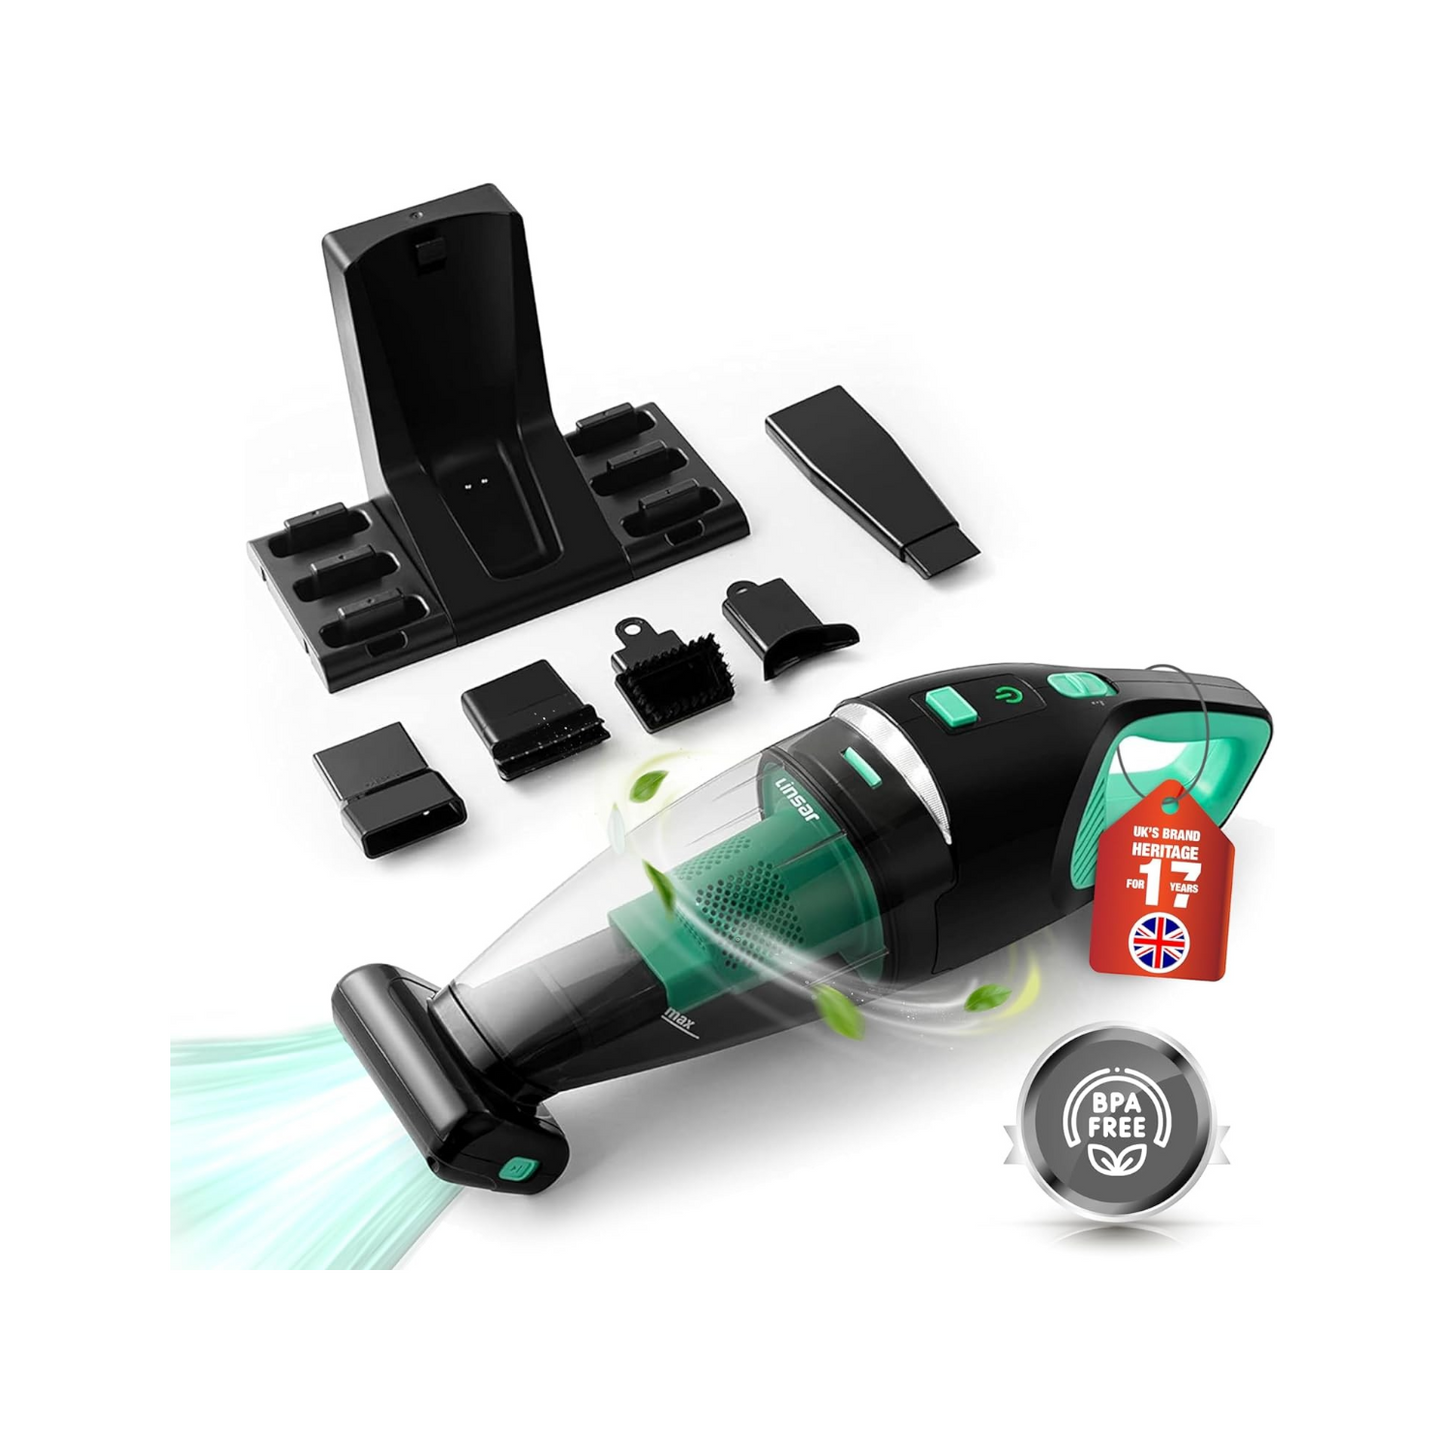 Linsar brand handheld vacuum cleaner